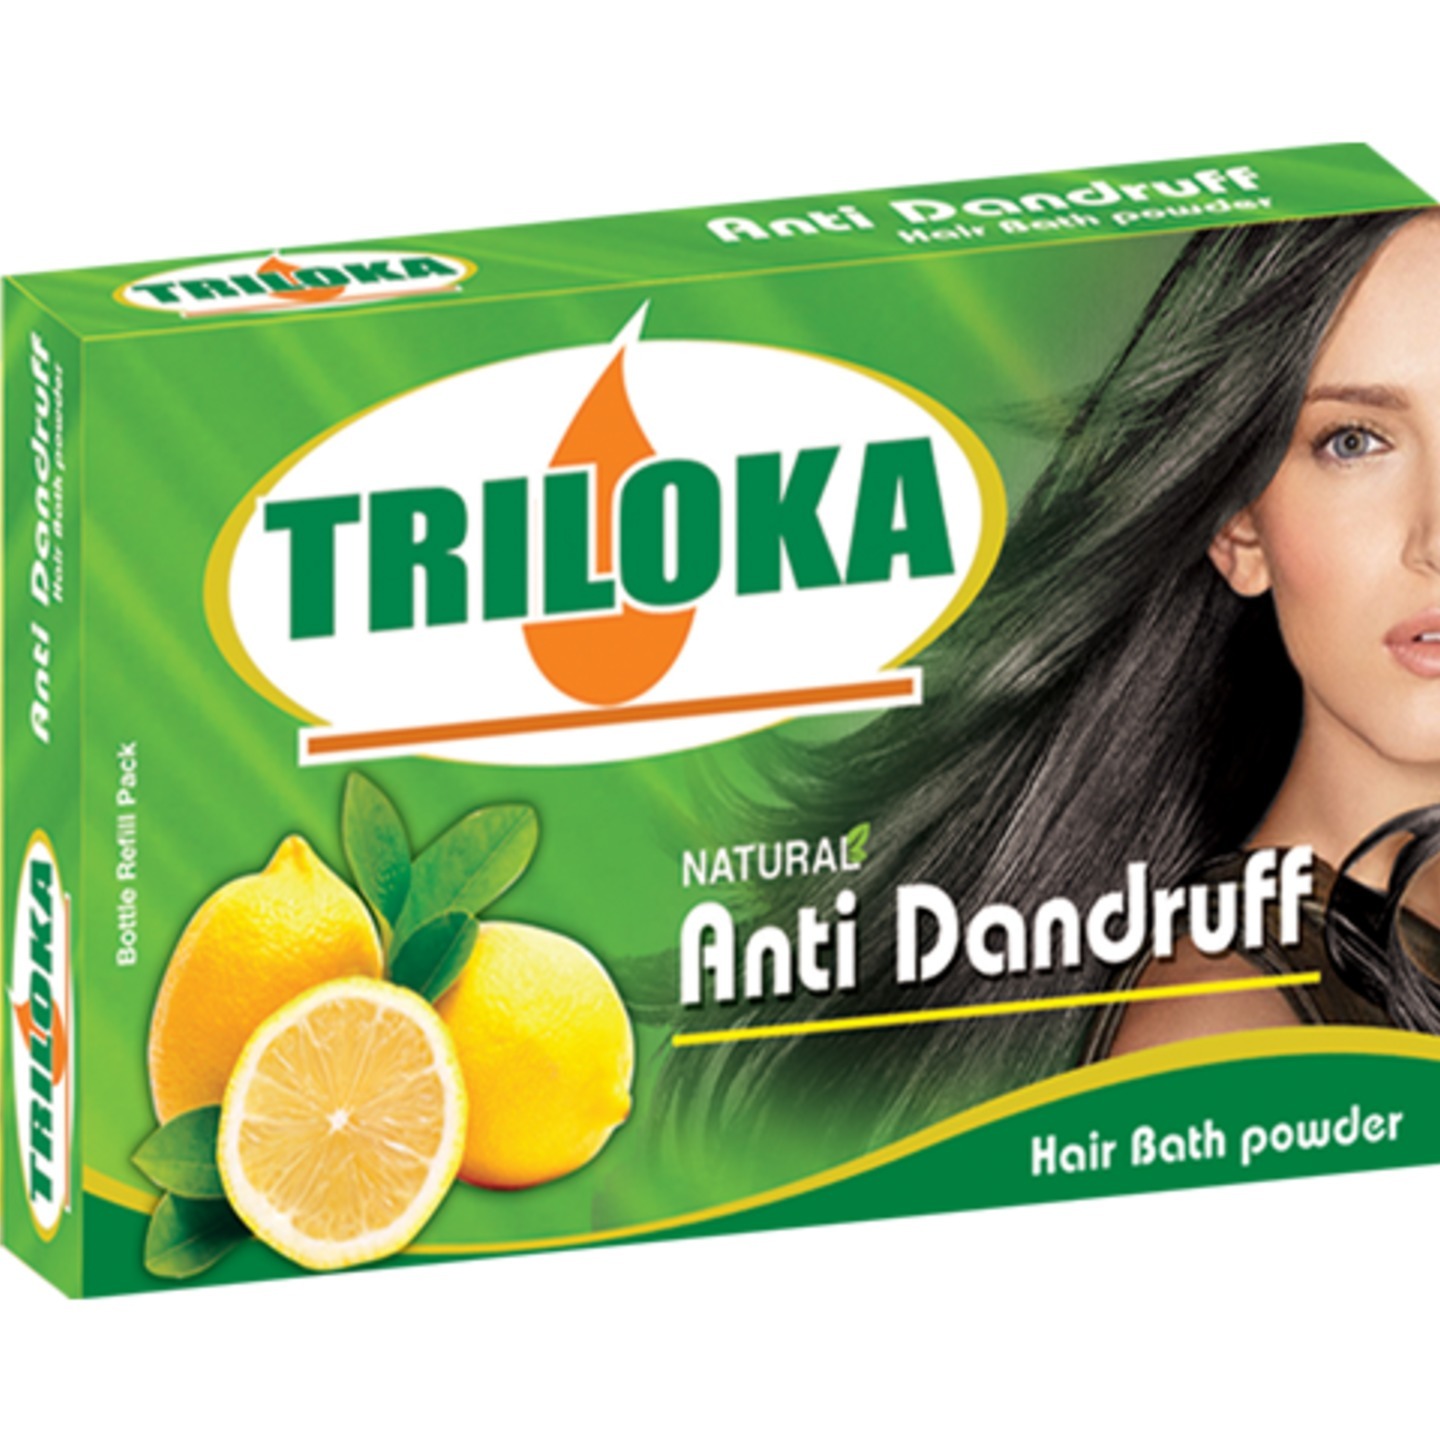 New Triloka Anti Dandruff Head Bathing Powder Refill Pack( Shampoo Powder) - 1 Dozen